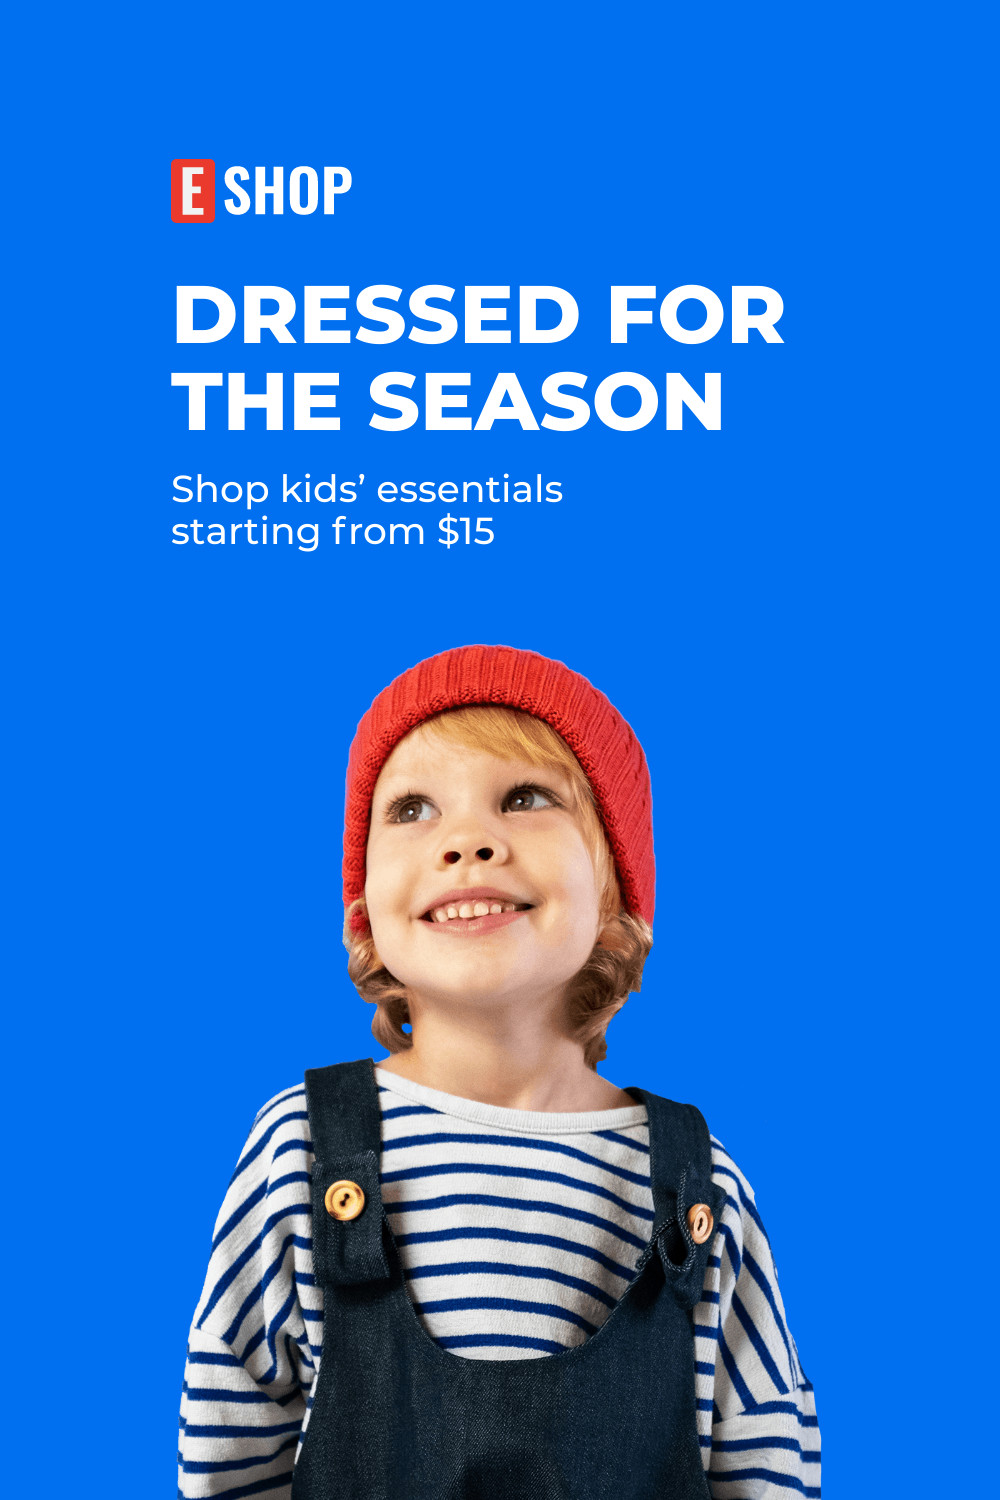 Dress Kids For The Season